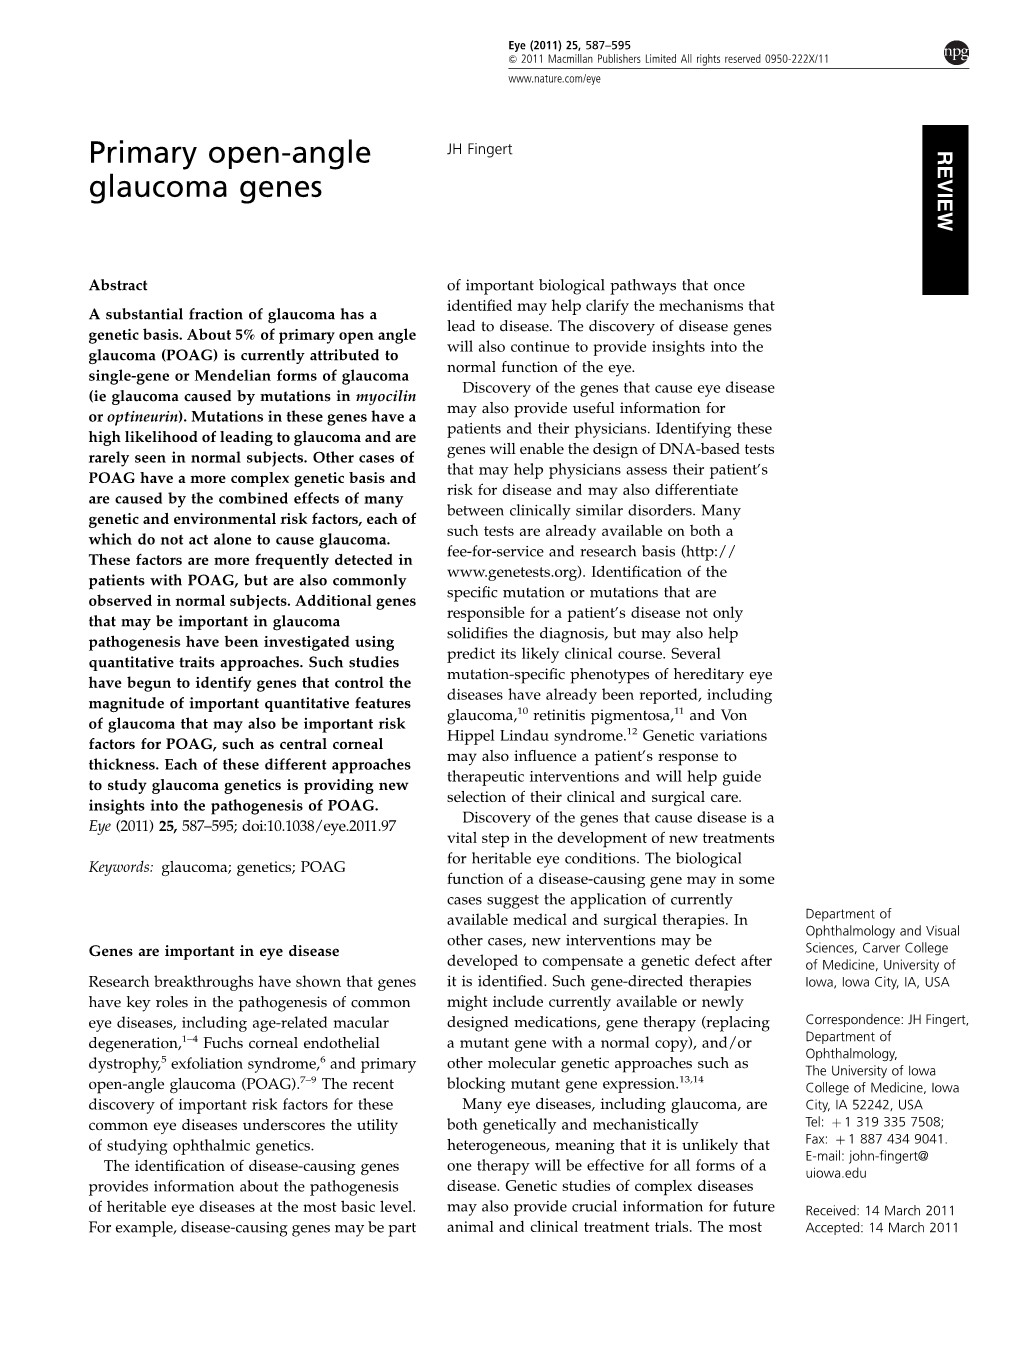 Primary Open-Angle Glaucoma Genes